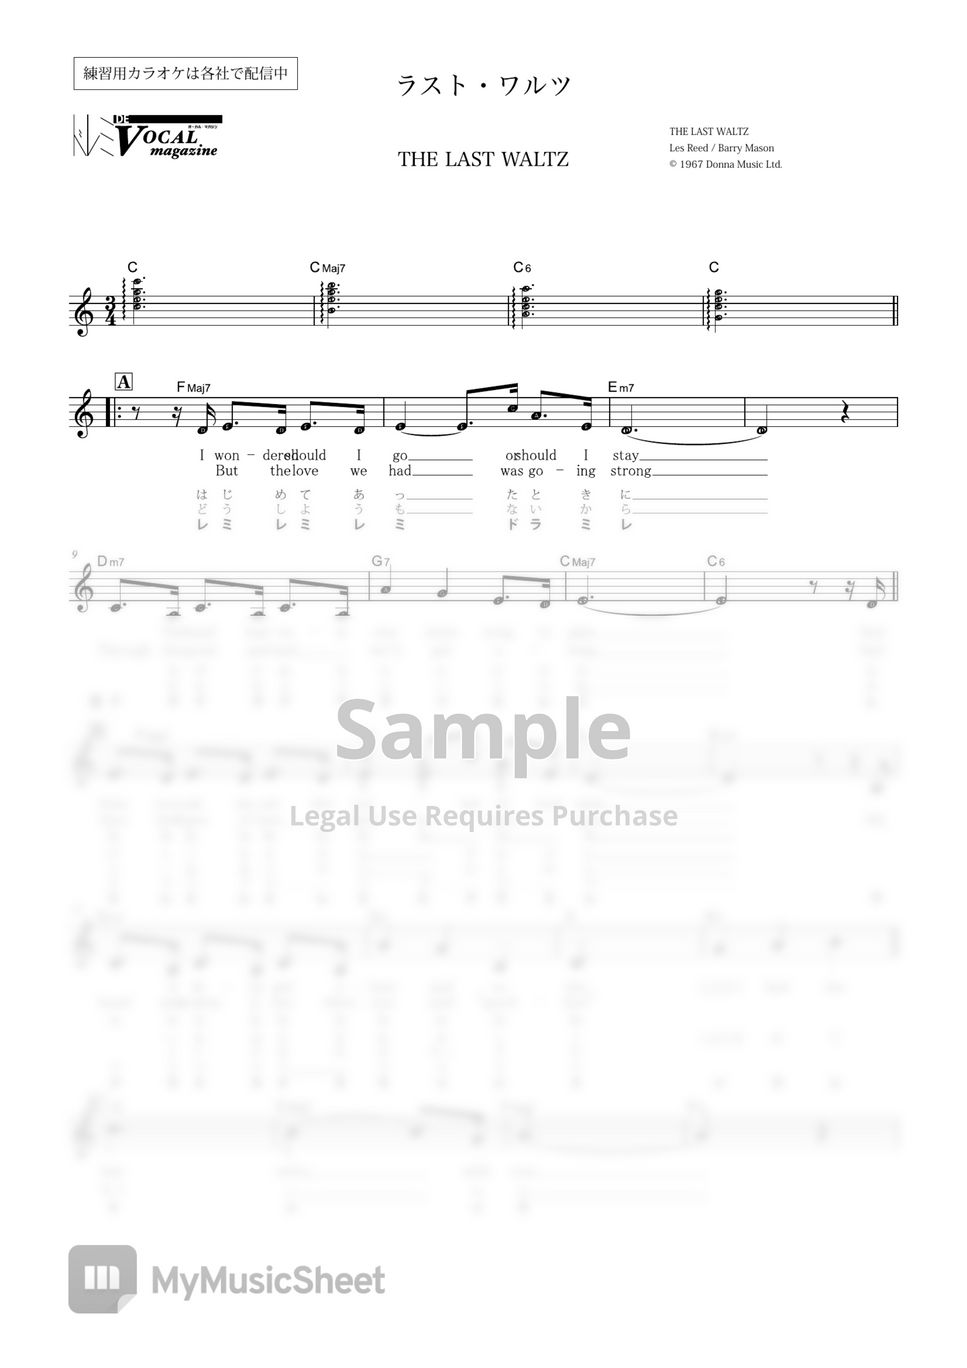 ENGELBERT HUMPERDINCK - DOREMI DE THE LAST WALTZ (VOCAL MAGAZINE) by Far East Island Record